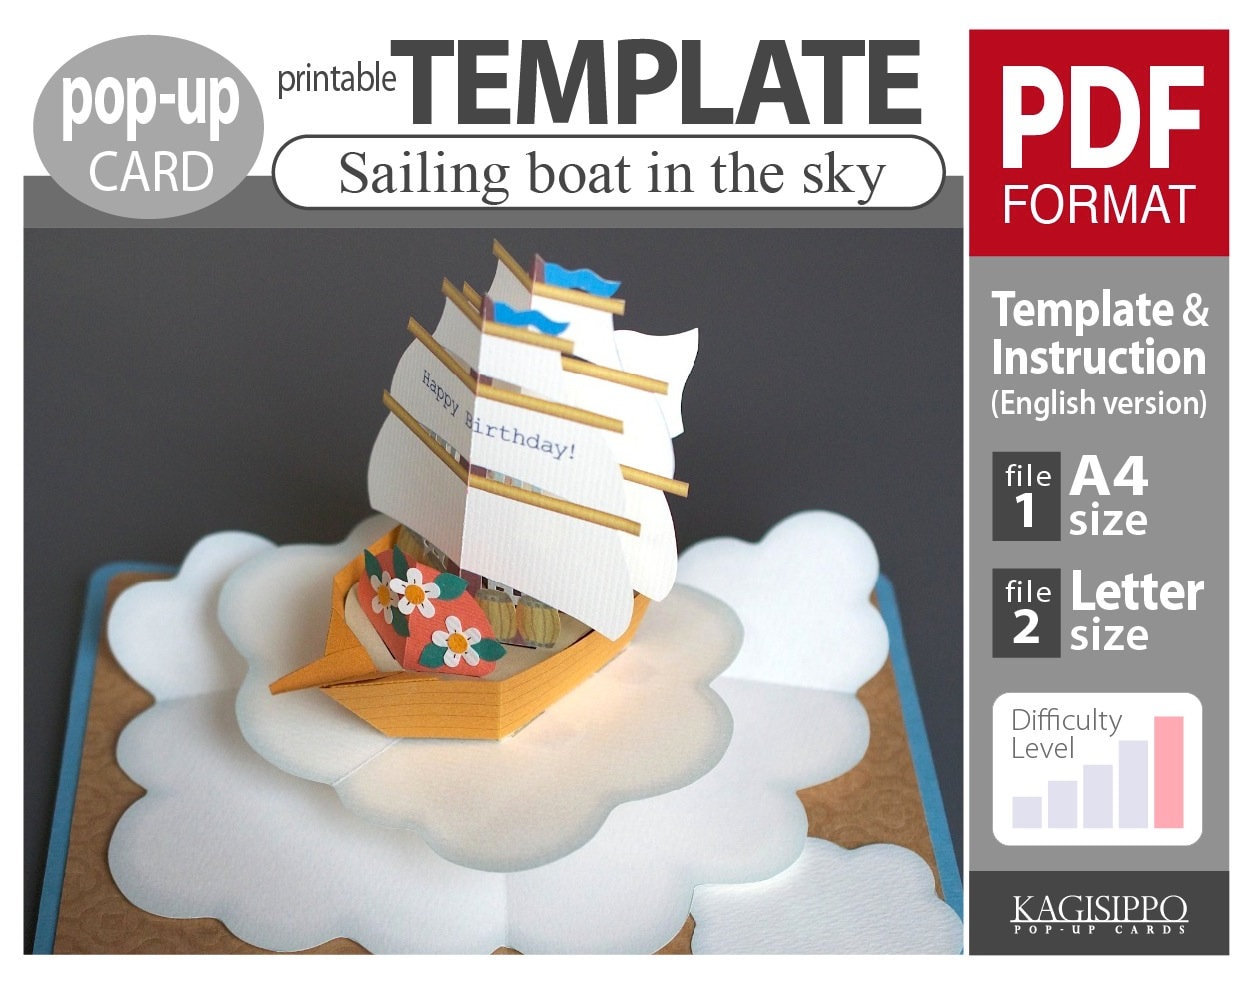 TEMPLATE pdf_digital Download File__pop-up Card__sailing image